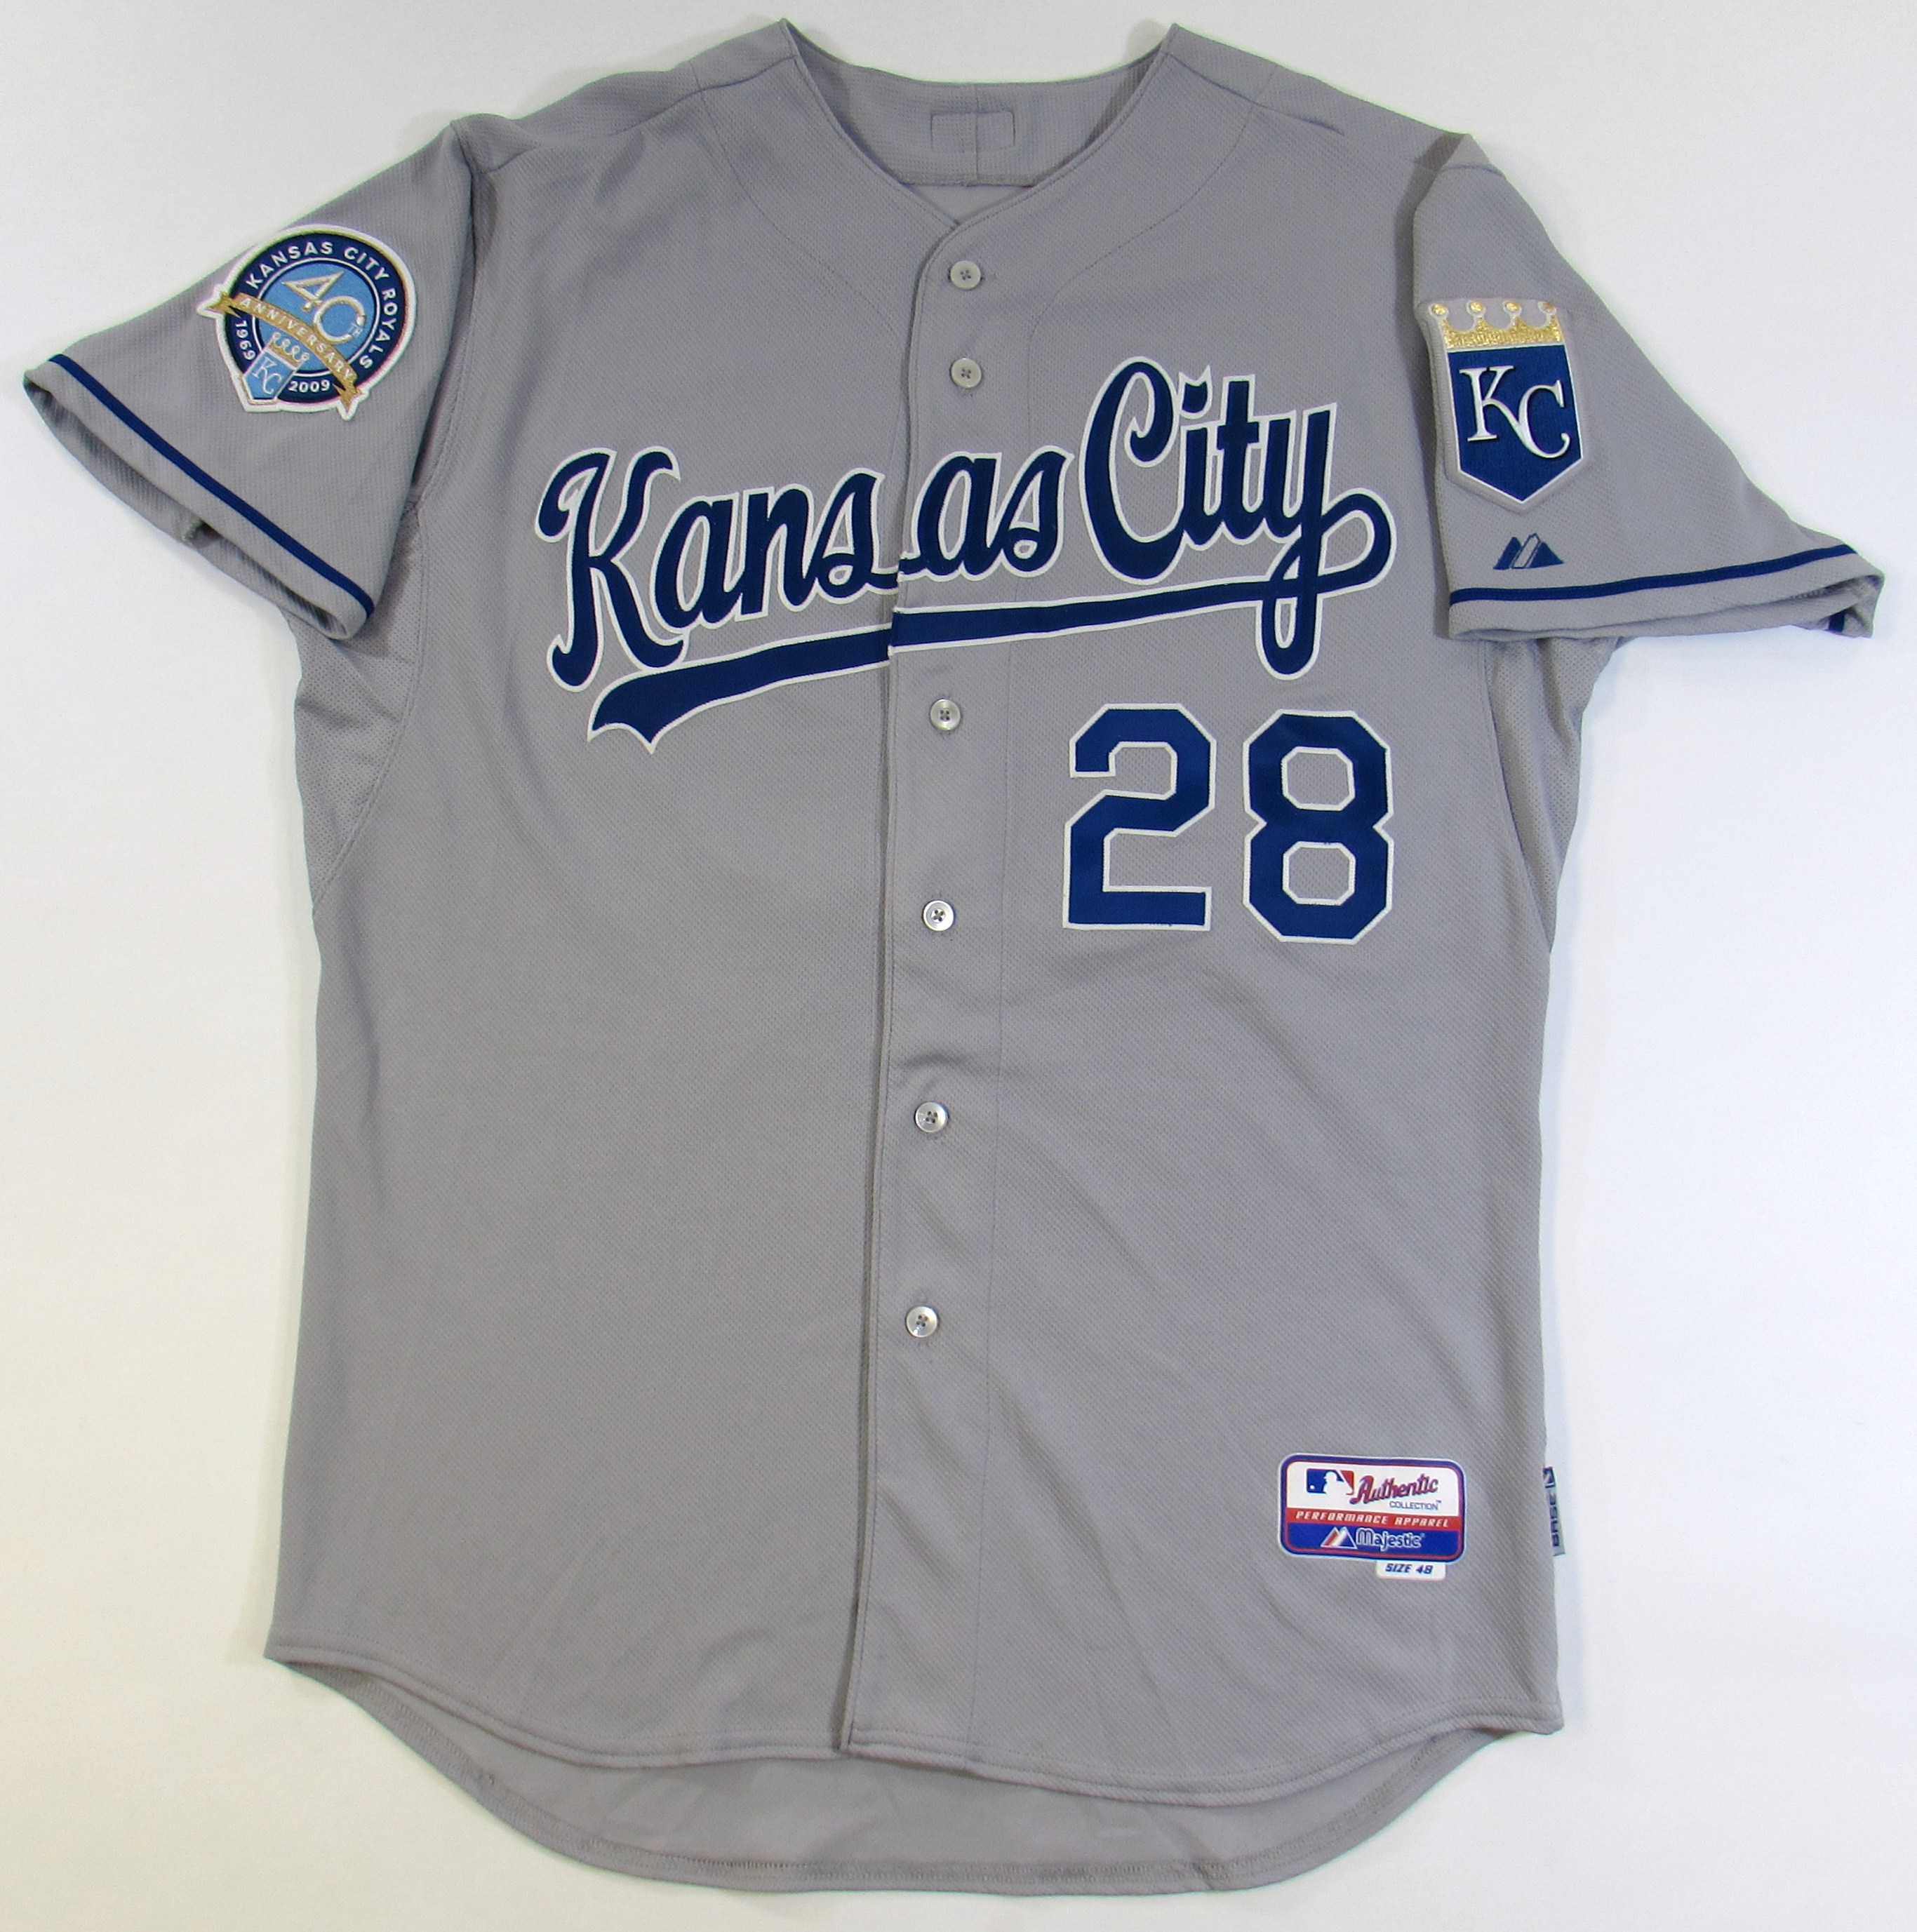 Kansas City Royals Authentic Collection, Royals Authentic Apparel